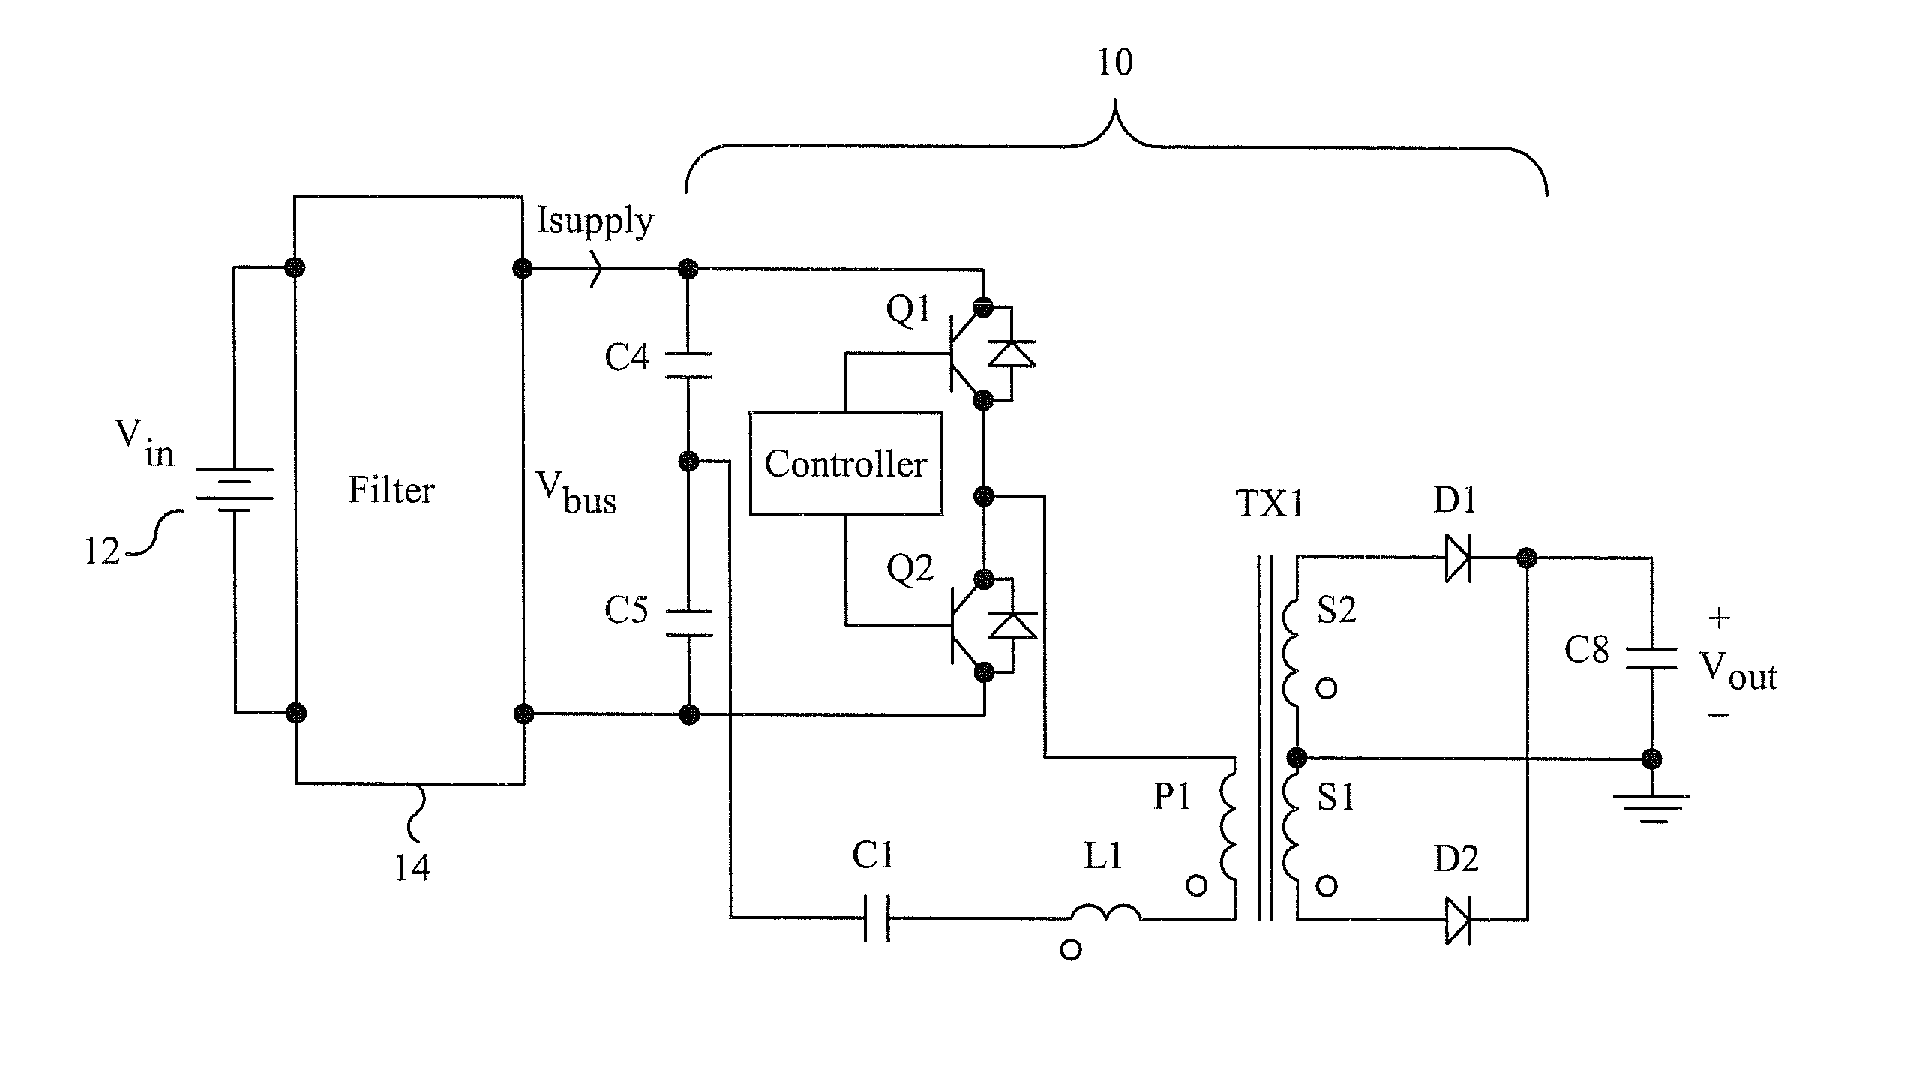 Power converter using multiple phase-shifting quasi-resonant converters